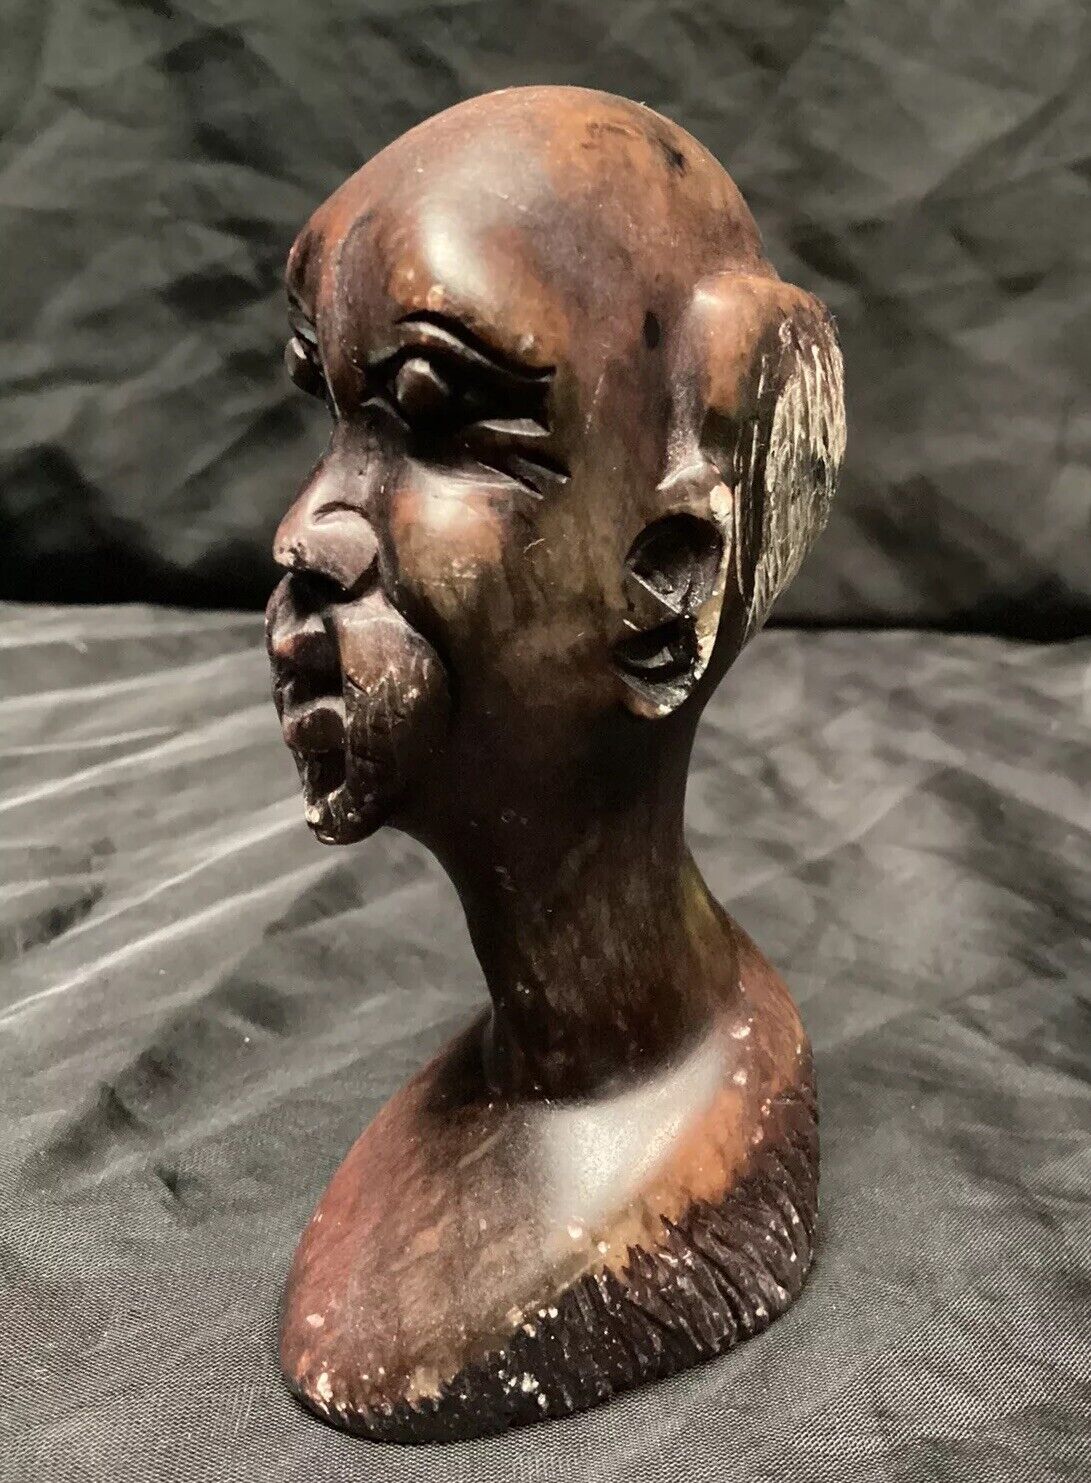 Vintage carved Stone Sculpture Figurine African Man Head Figurine Paperweight